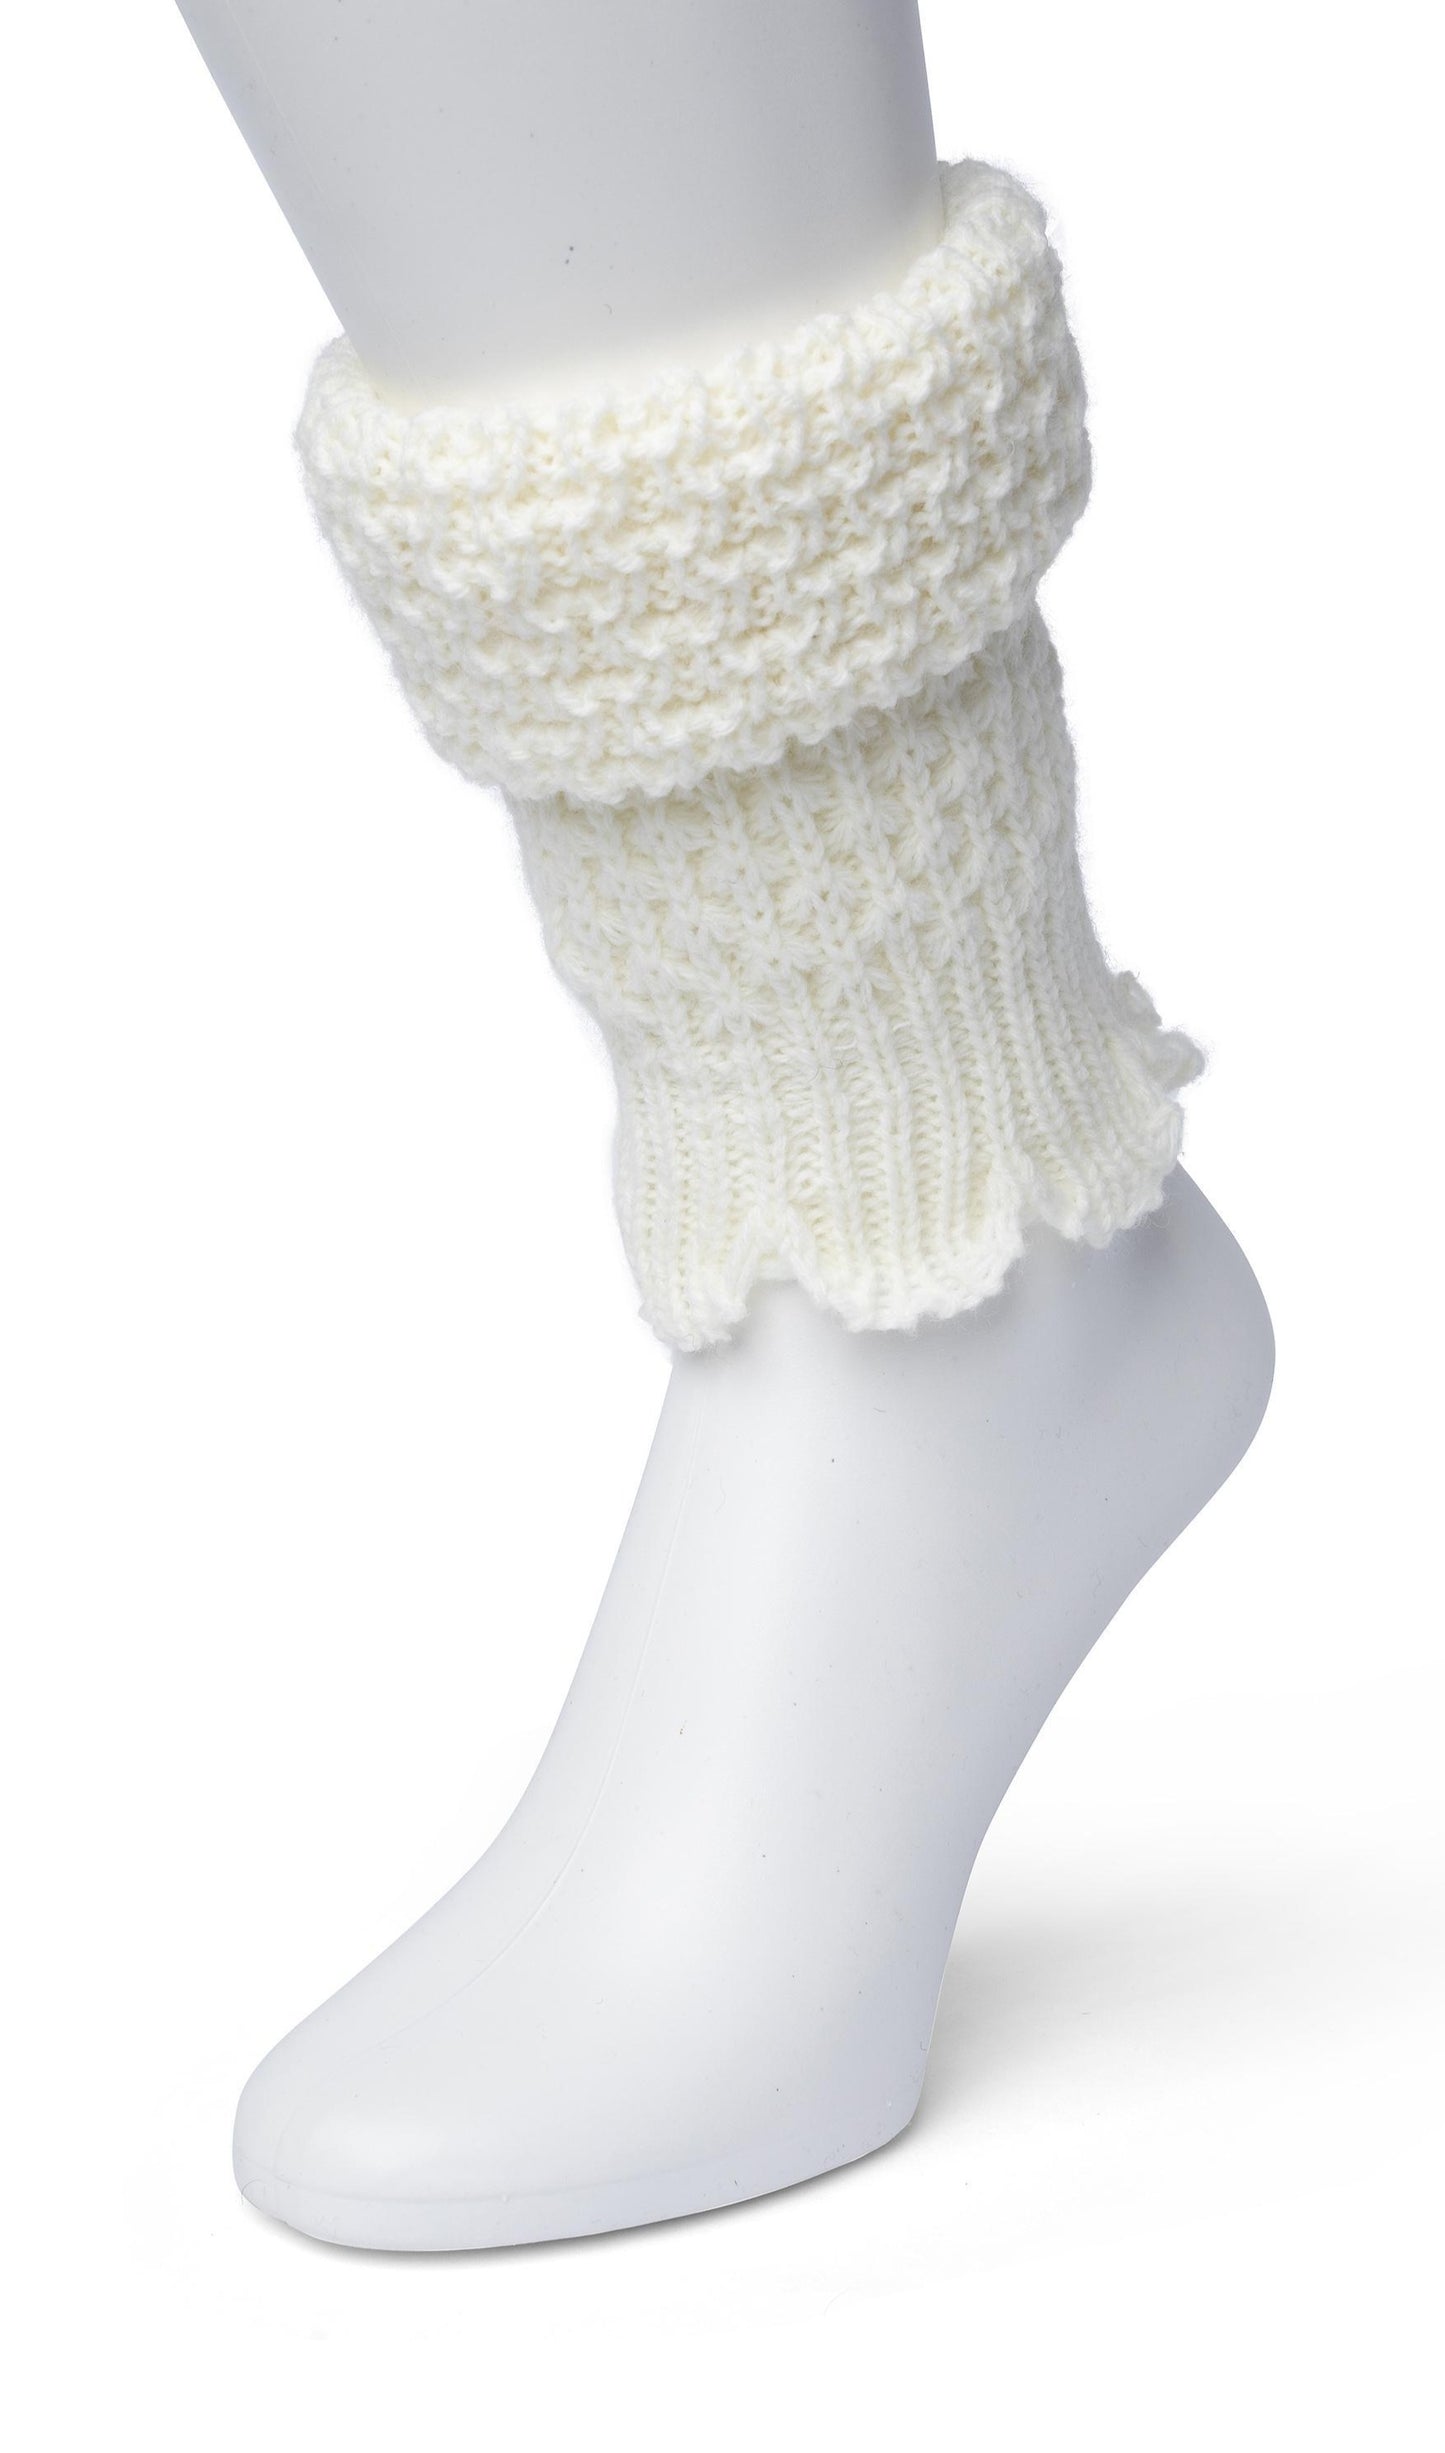 Bonnie Doon - Honeycomb Boot Top BN351789 - ivory cream leg warmer boot cuff